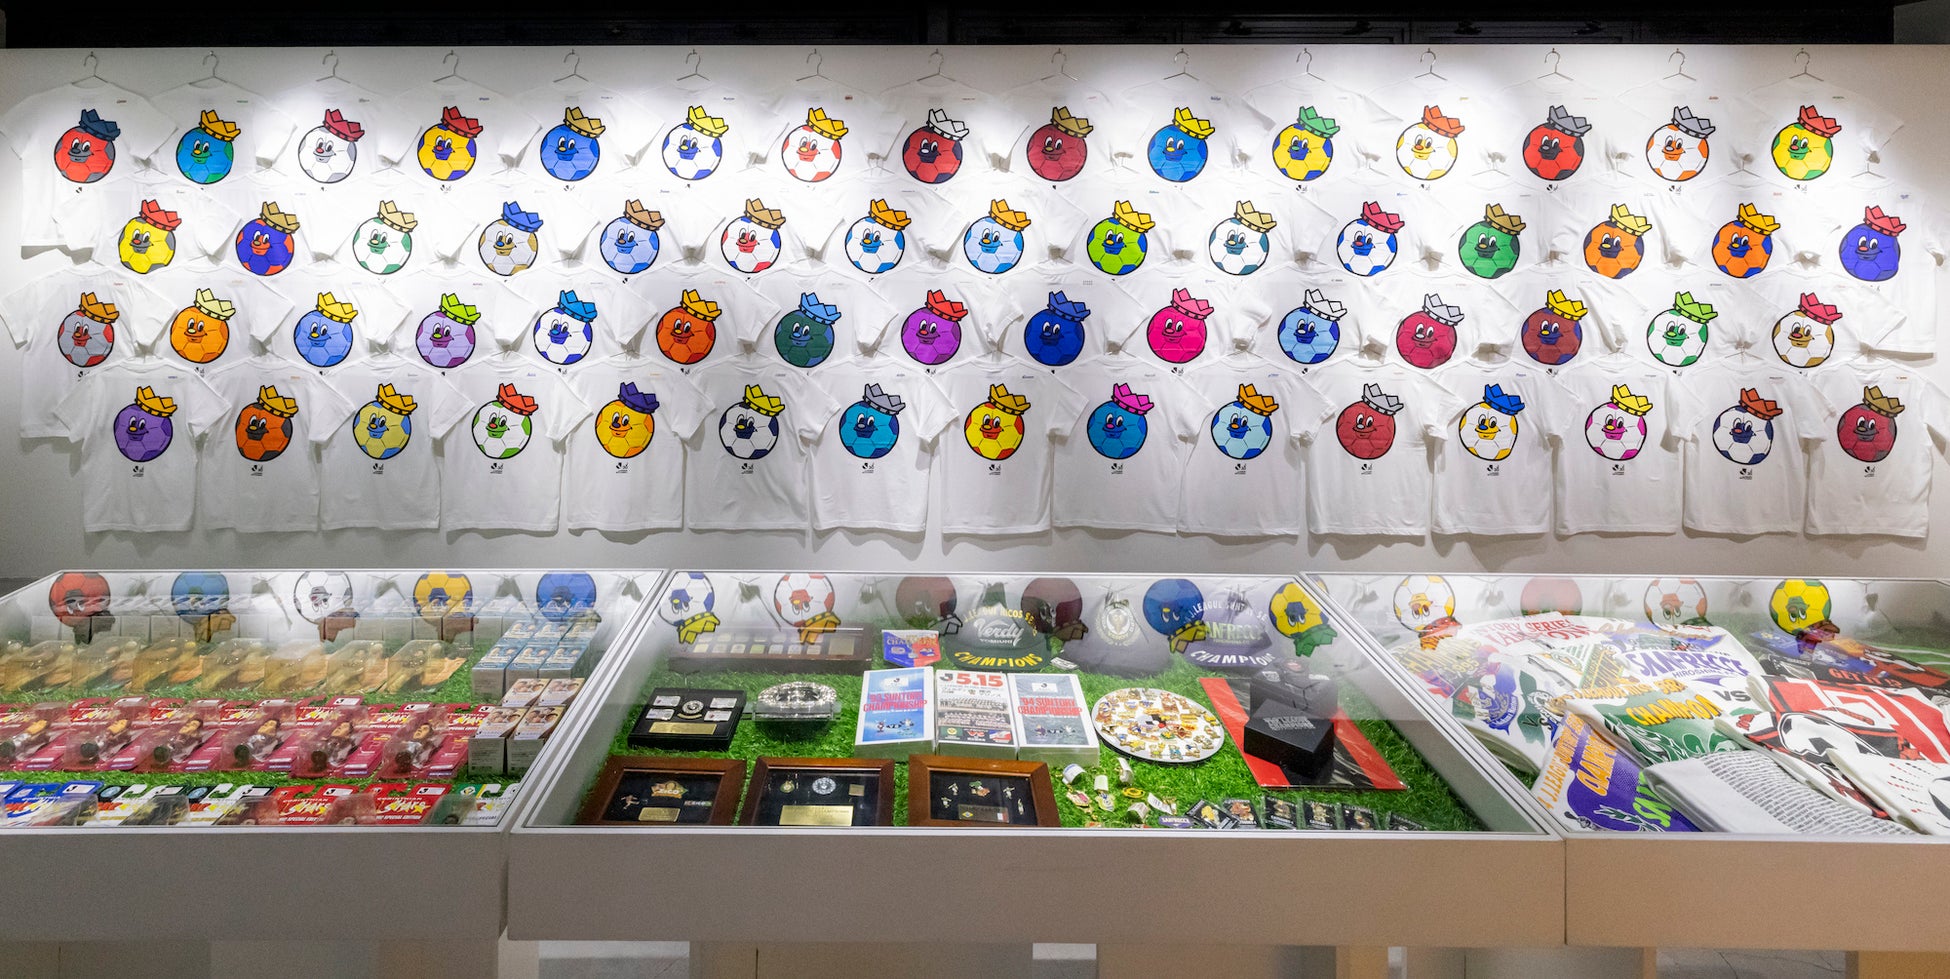 Ｊリーグの30年を振り返るギャラリー展示やコラボ商品の販売など、4月26日よりBEAMS JAPAN各店で日本のサッカー文化を盛り上げる「BEAMS SOCCER」プロジェクト第一弾がスタート